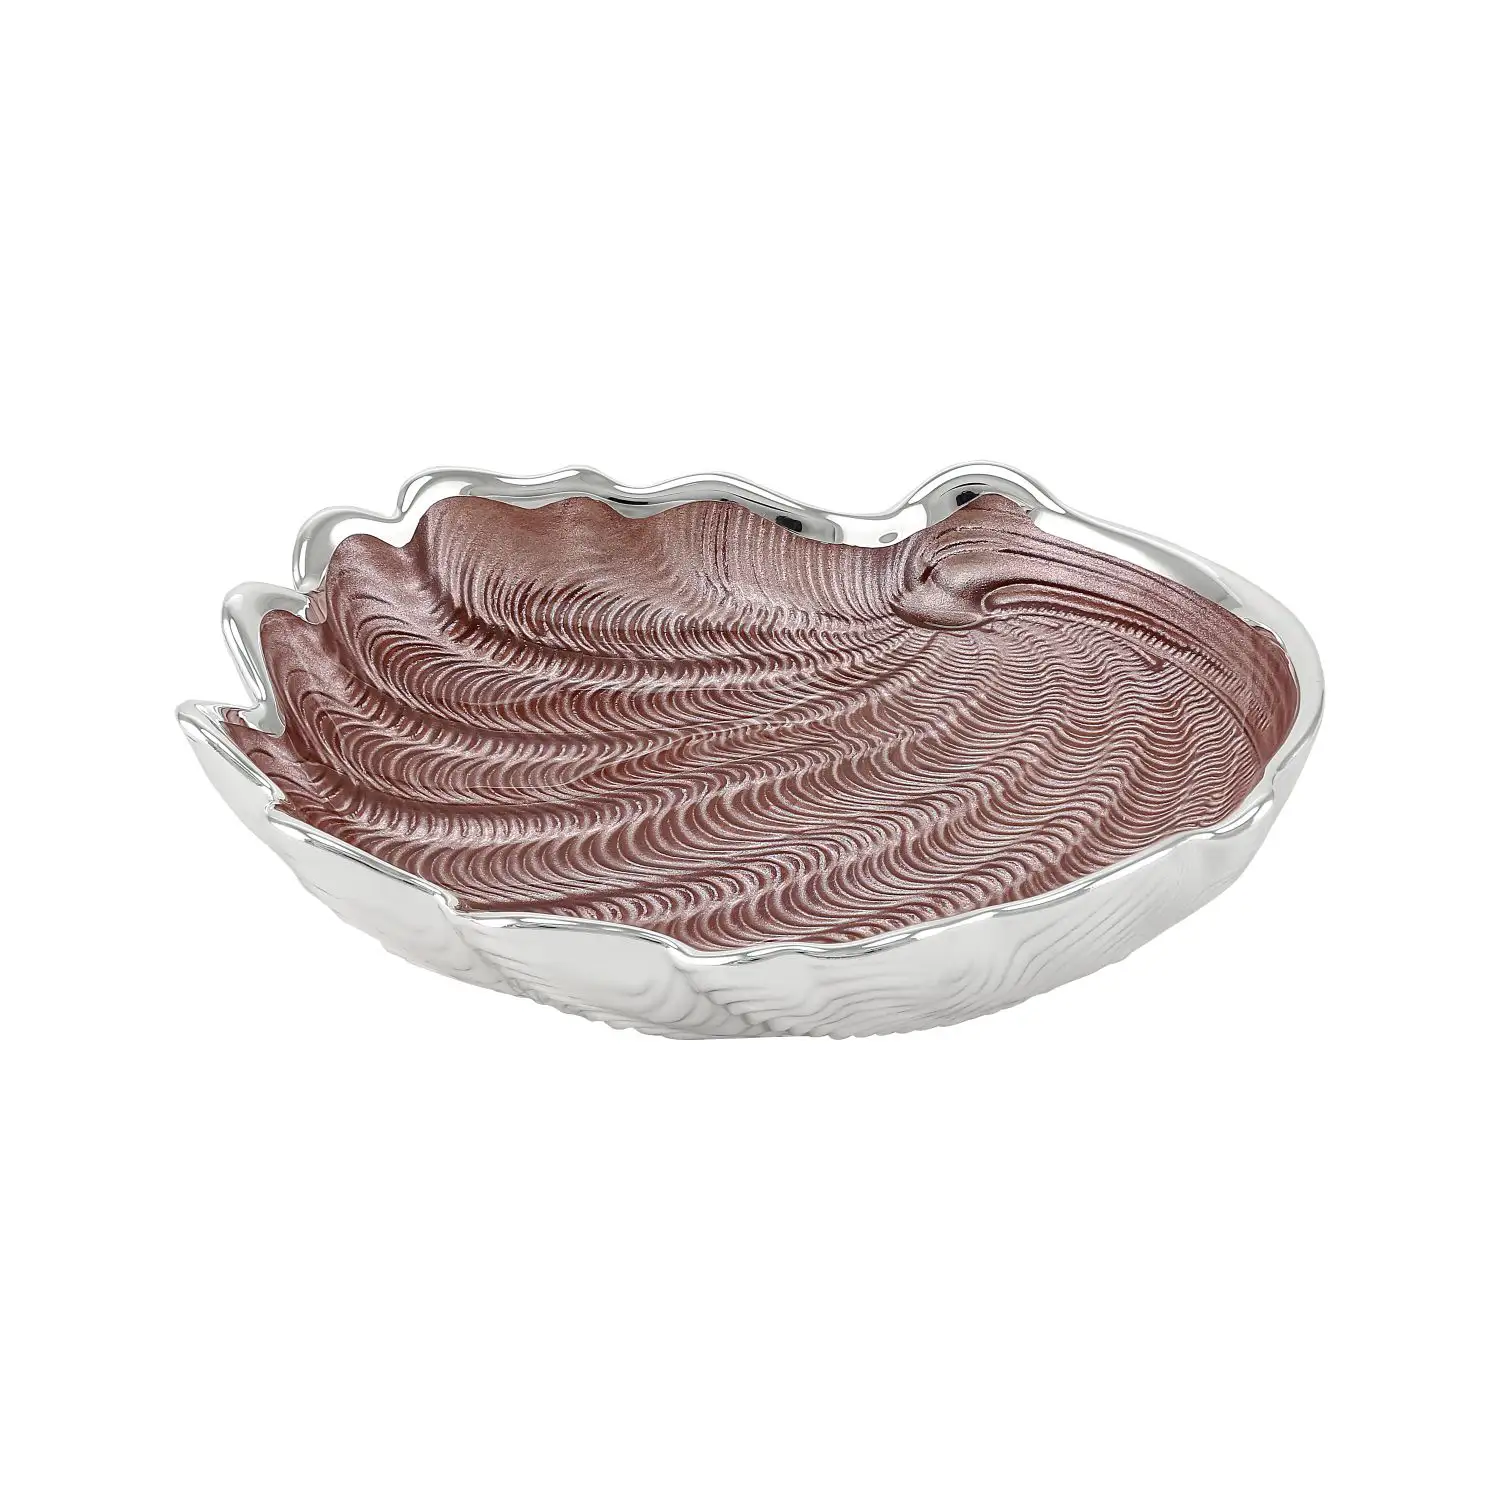 Тарелка стеклянная CONCHIGLIA (цвет бледно-розовый) диаметр 15 см тарелка стеклянная conchiglia цвет песочный диаметр 15 см